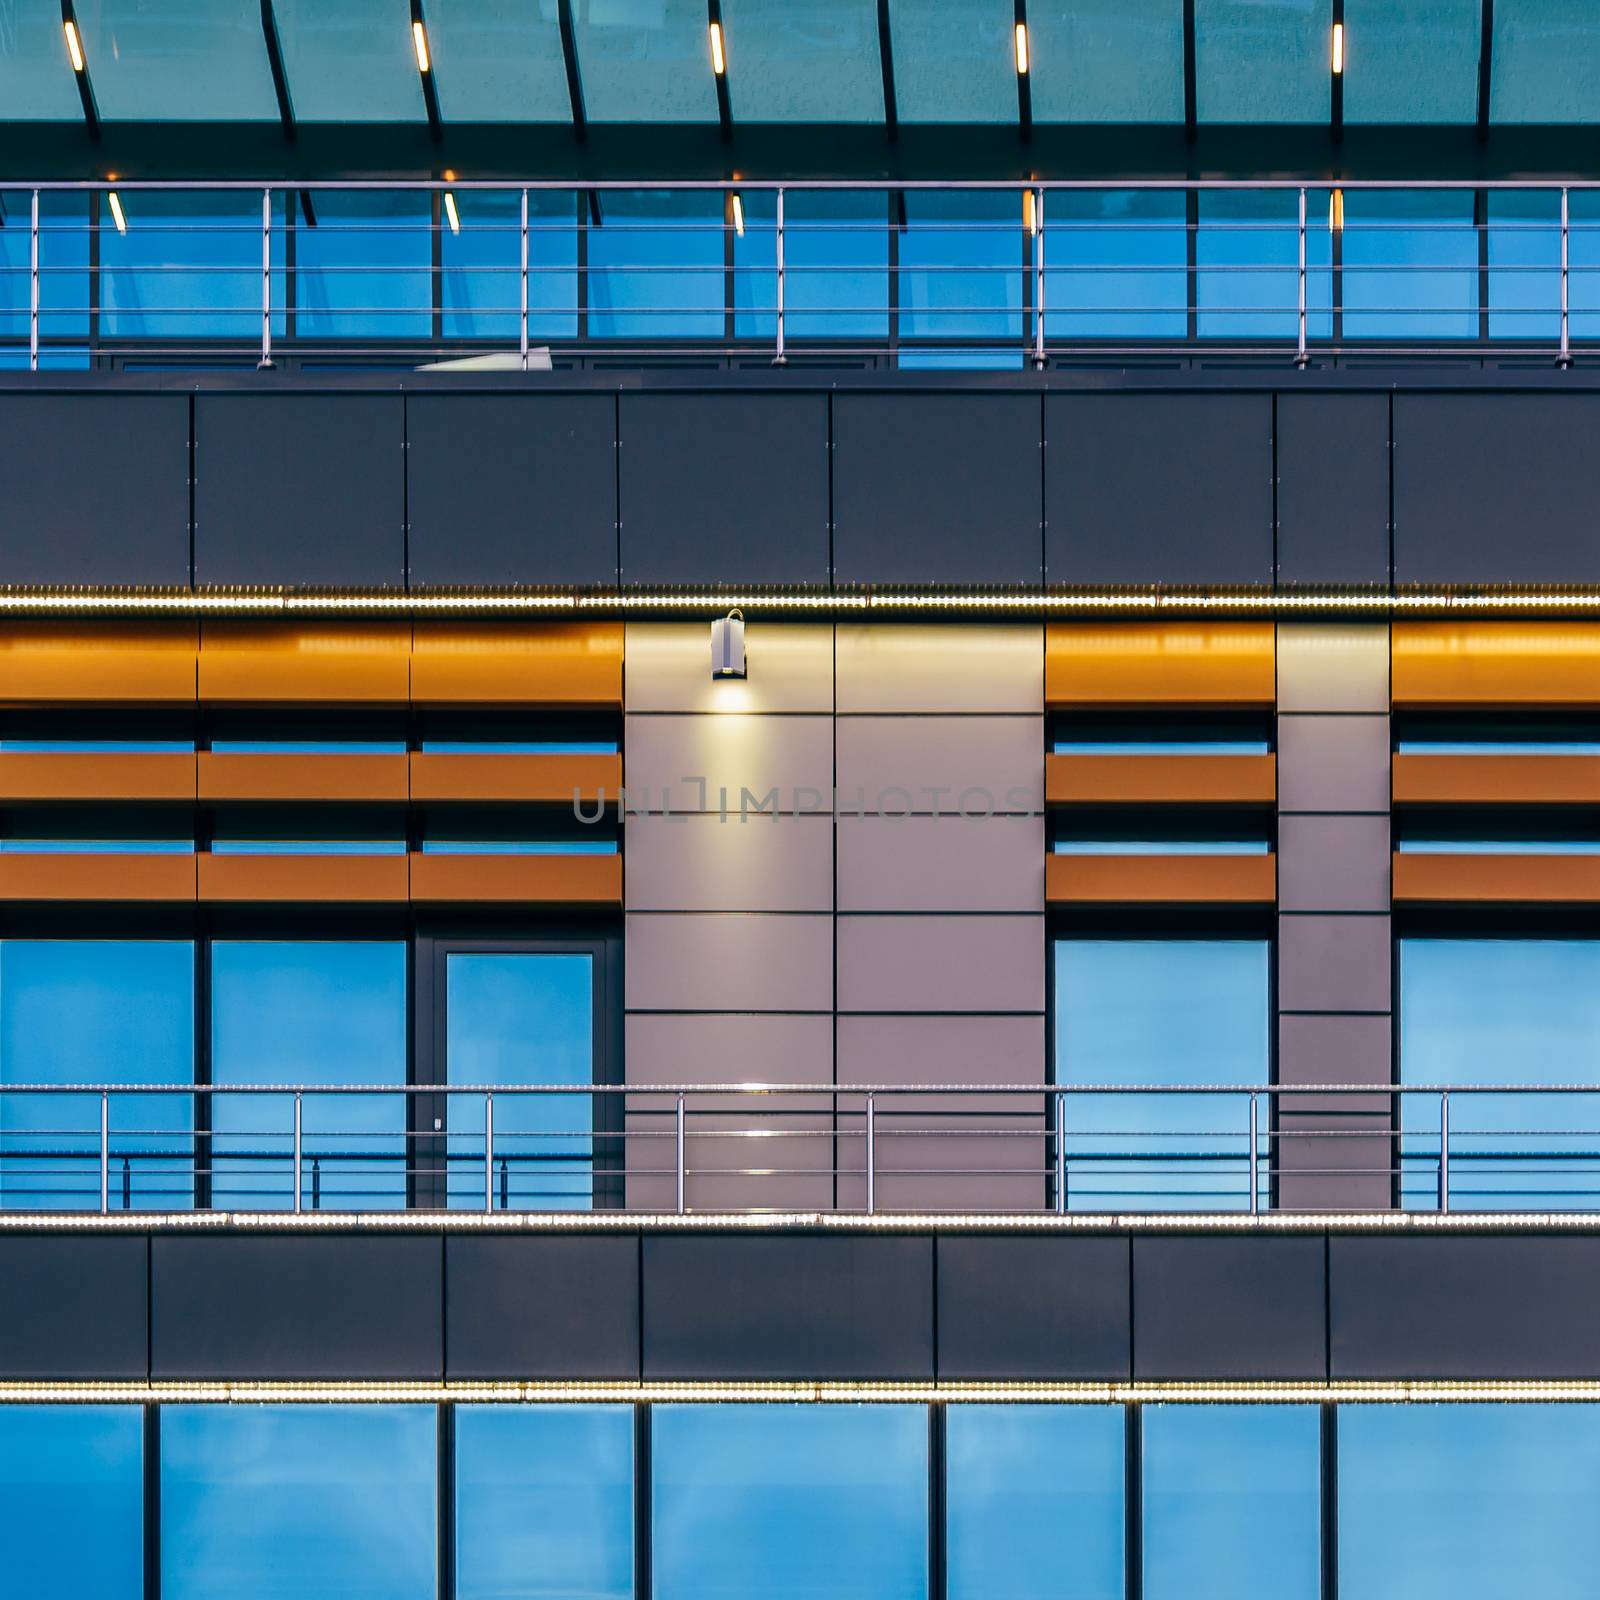 Modern high-rise building with a glass facade. by Seva_blsv